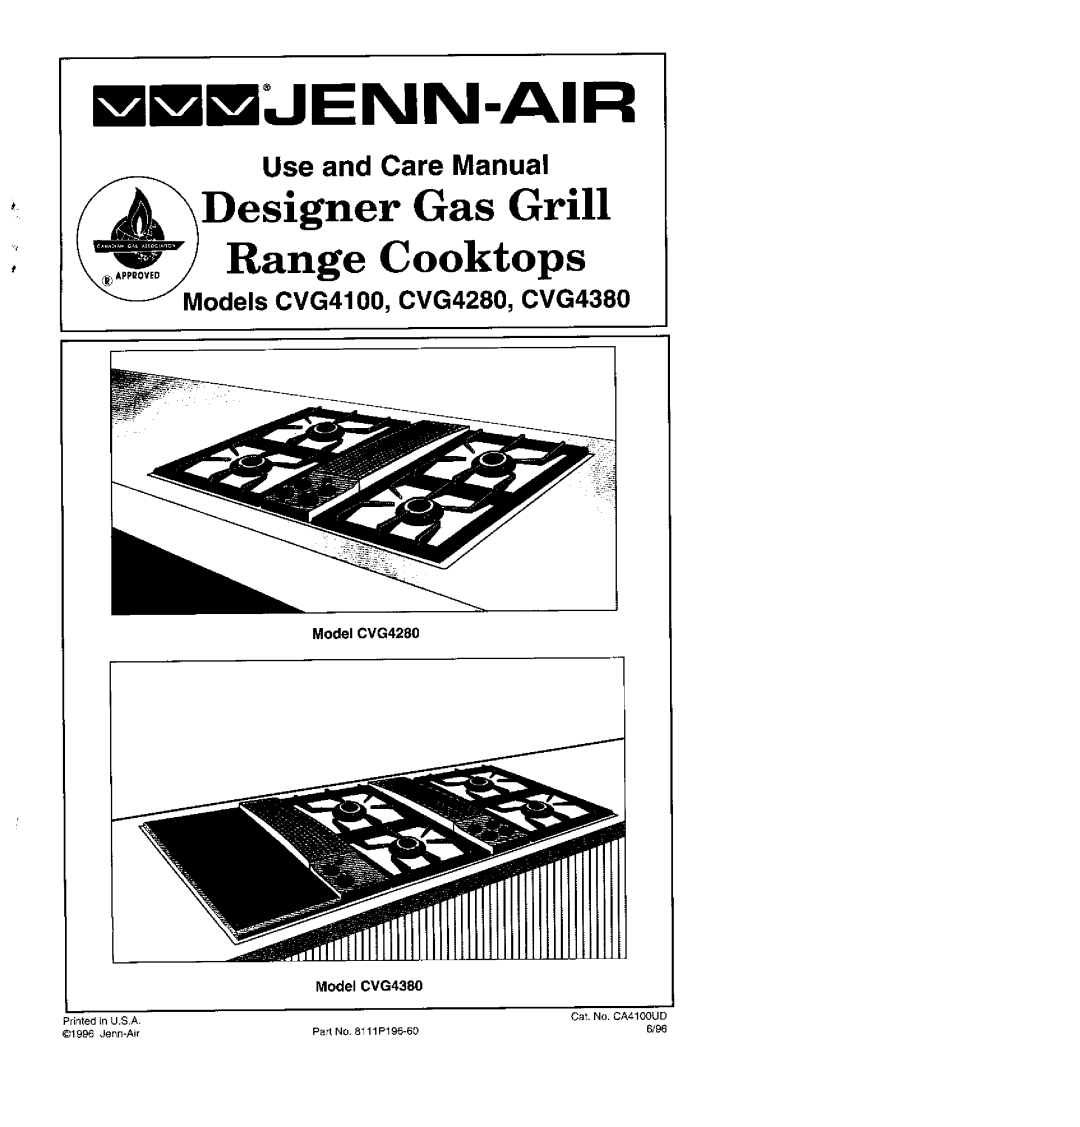 Jenn-Air CVG4380 manual mBmJENN-AIR, Designer, Gas Grill, Range, Cooktops, Use and, Care Manual, Cat. No. CA4100UD, 6/96 